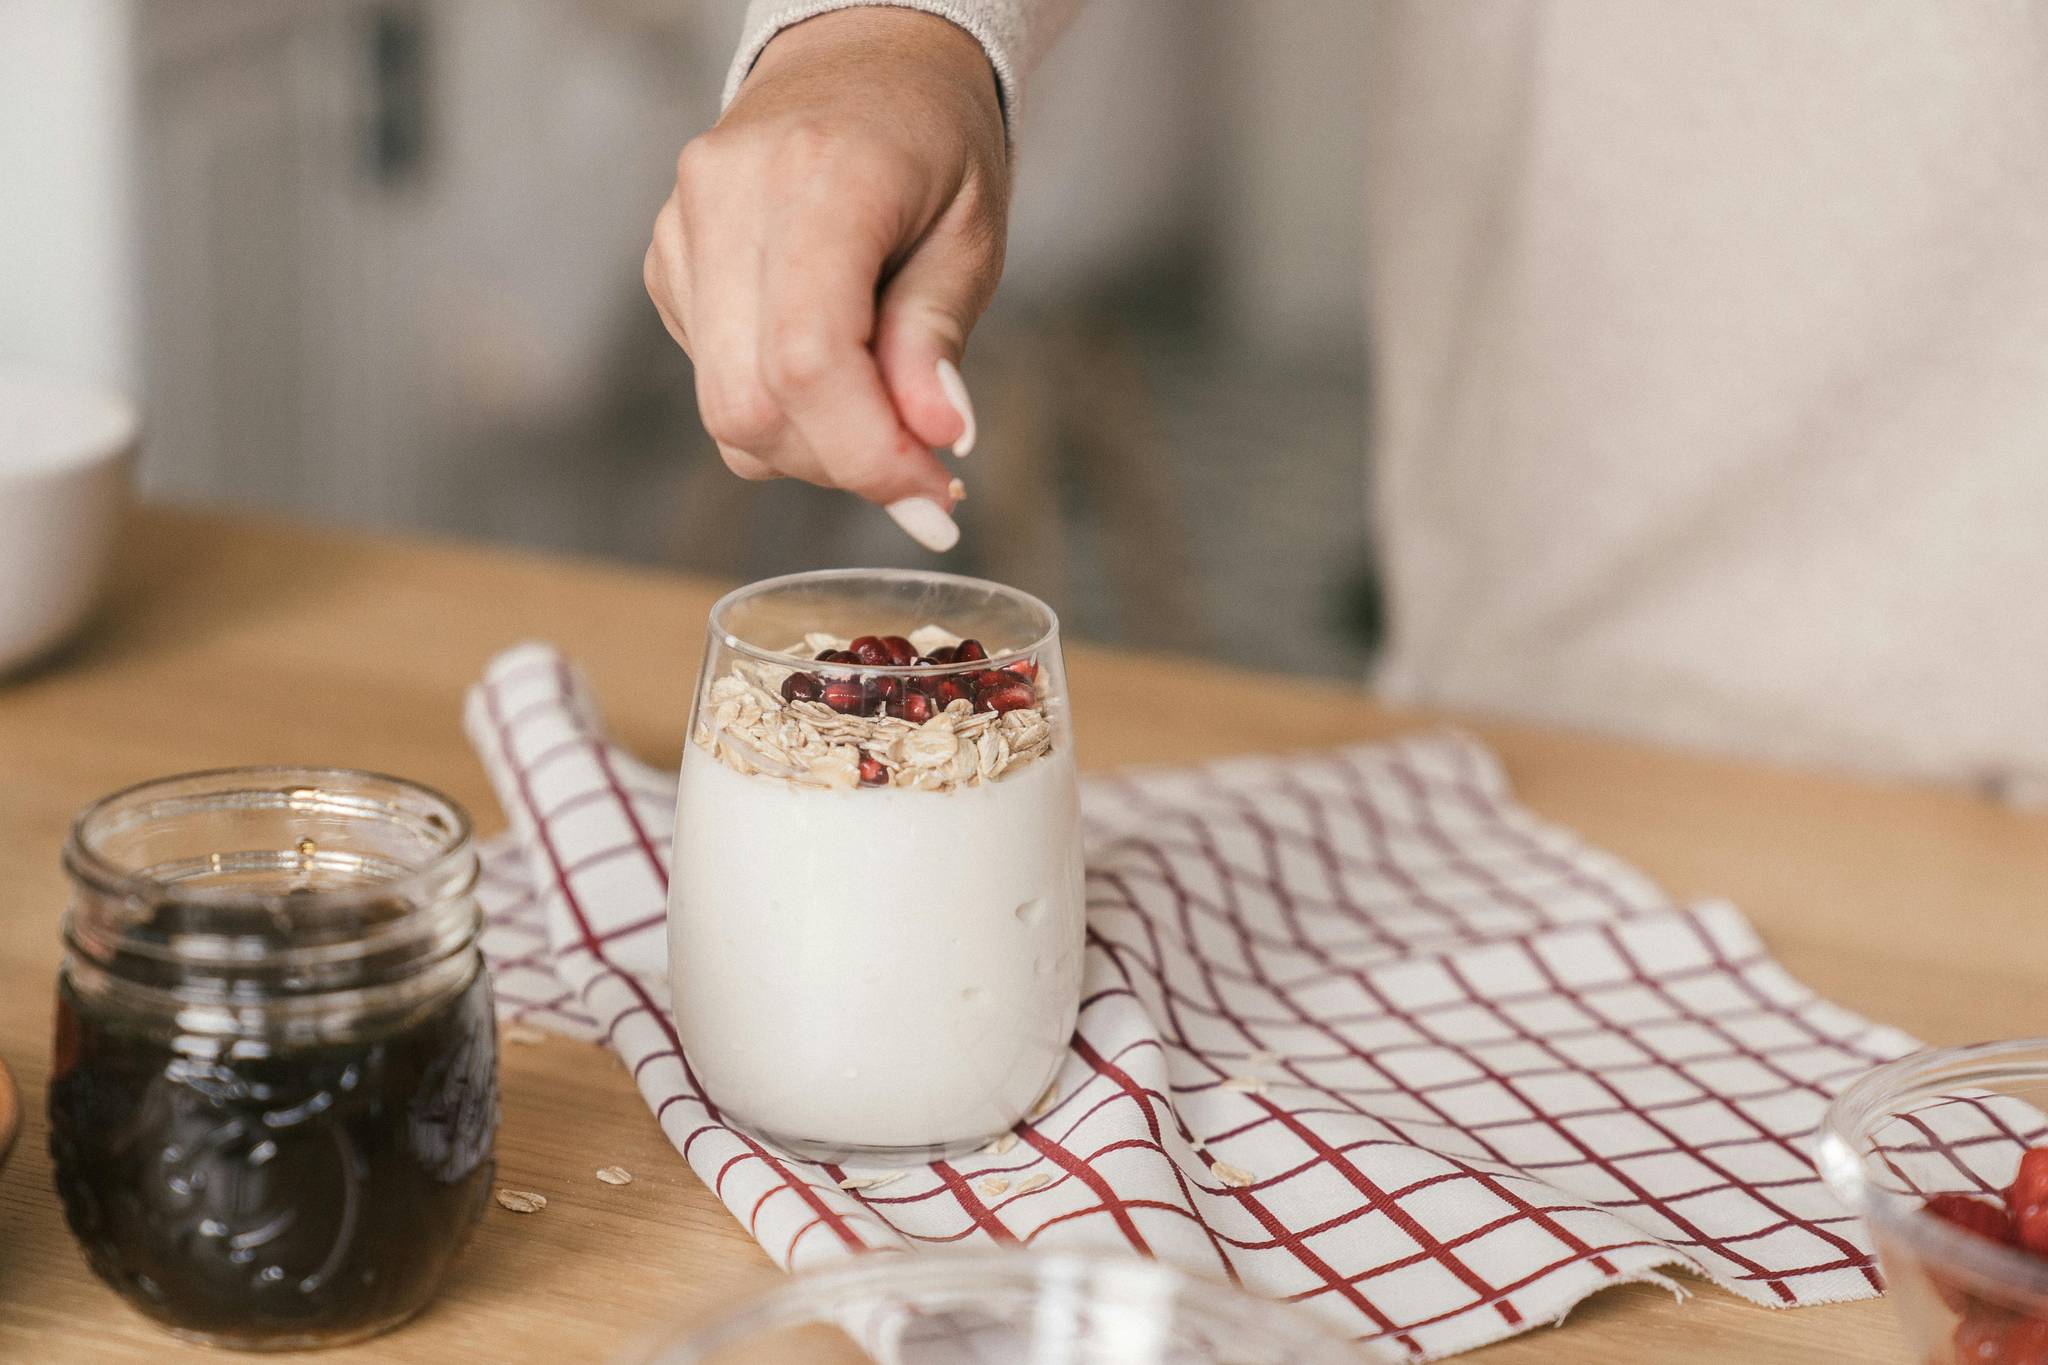 Mood-boosting yoghurt promotes mental wellbeing in Chile